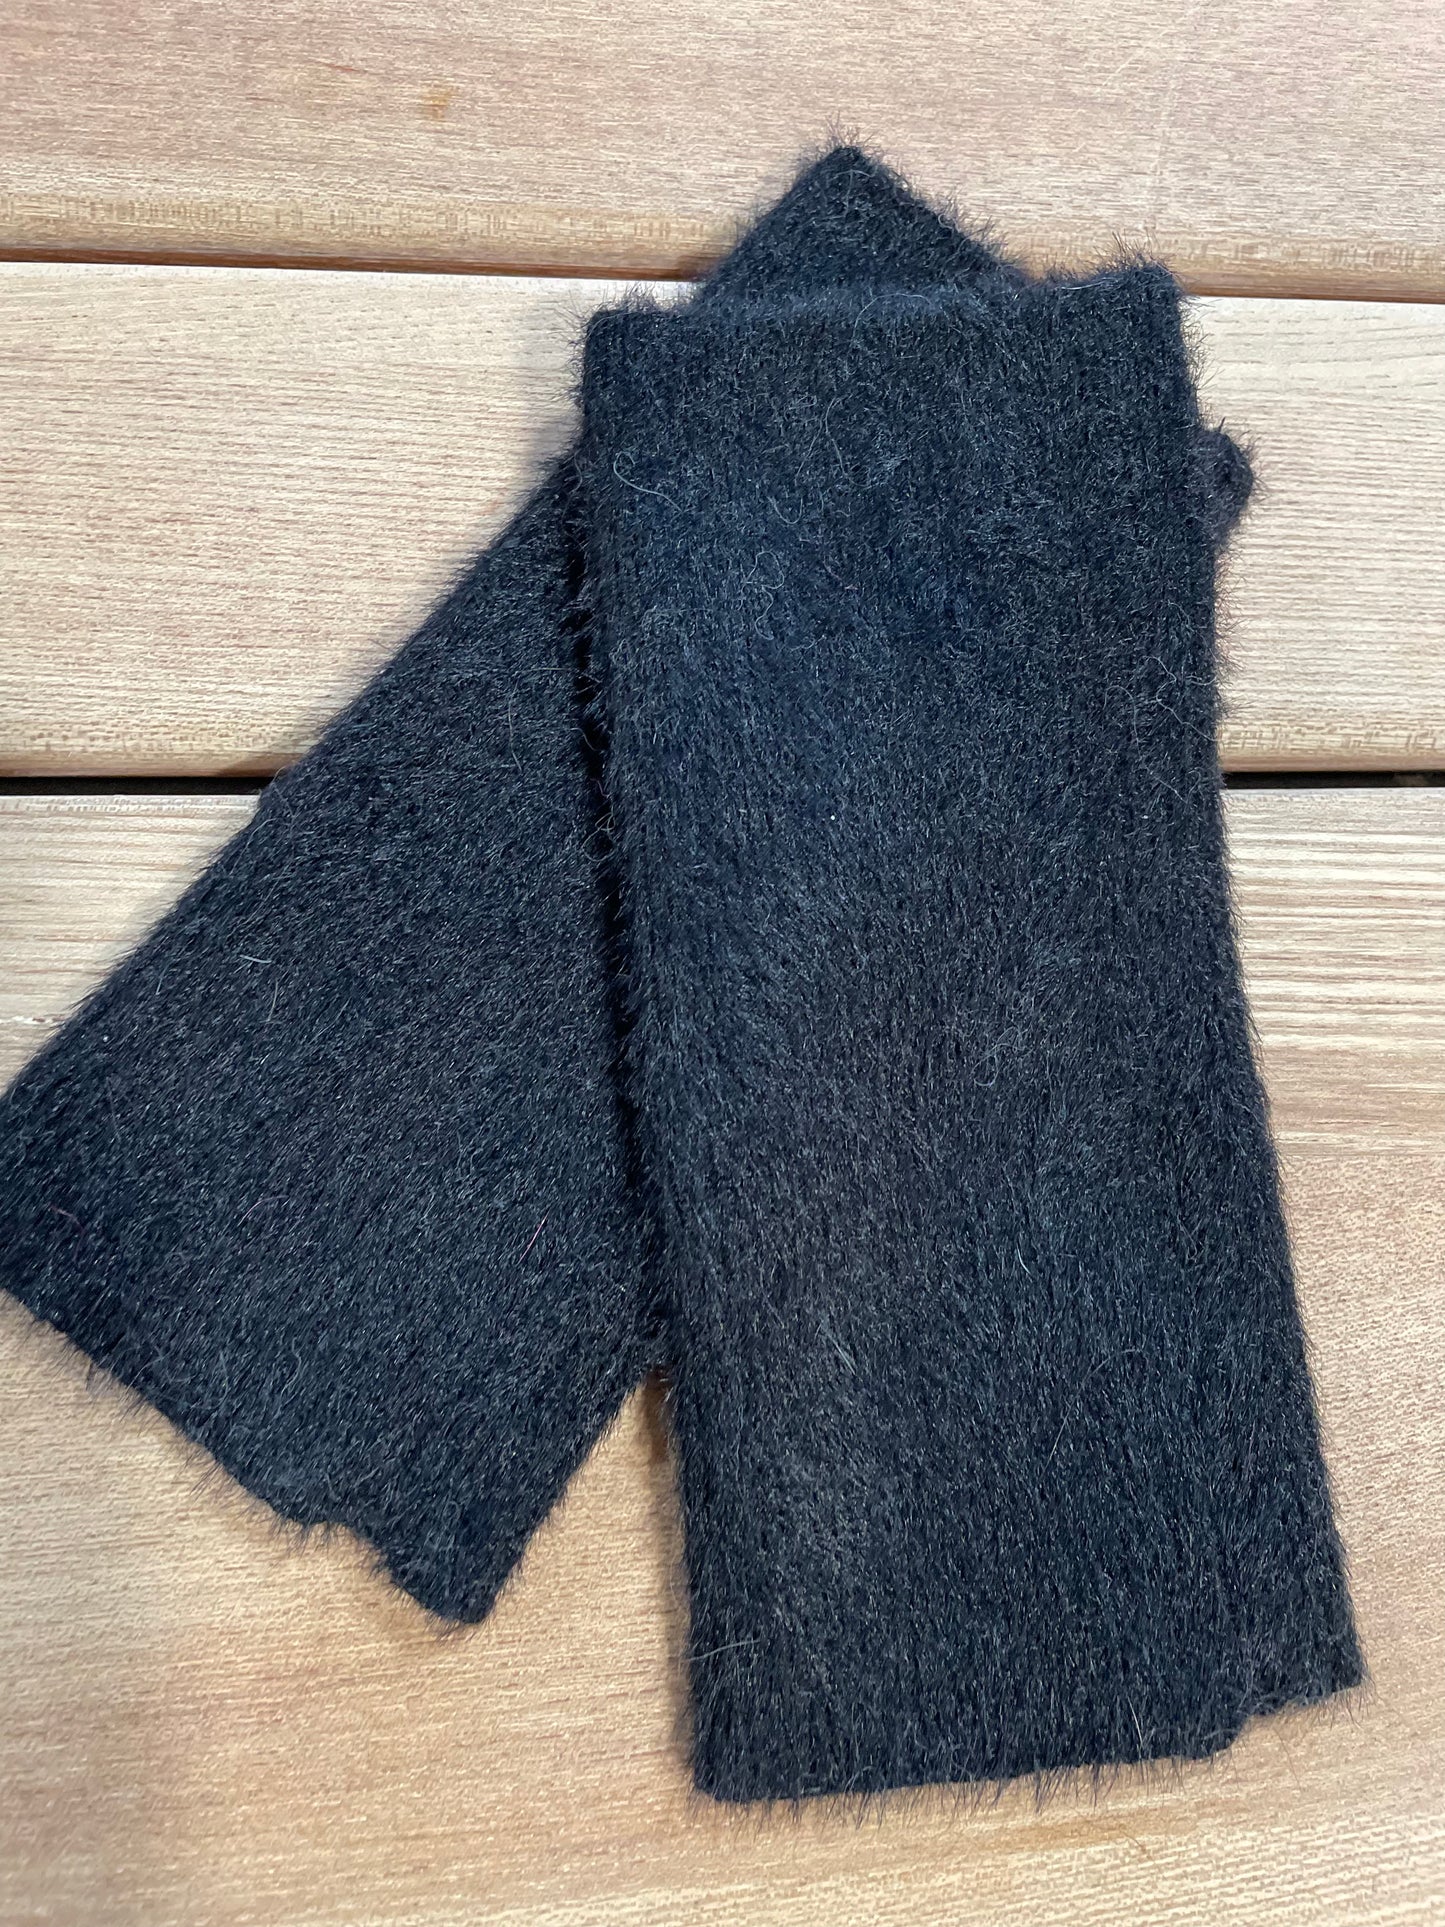 Gloves Mittens Knit Black